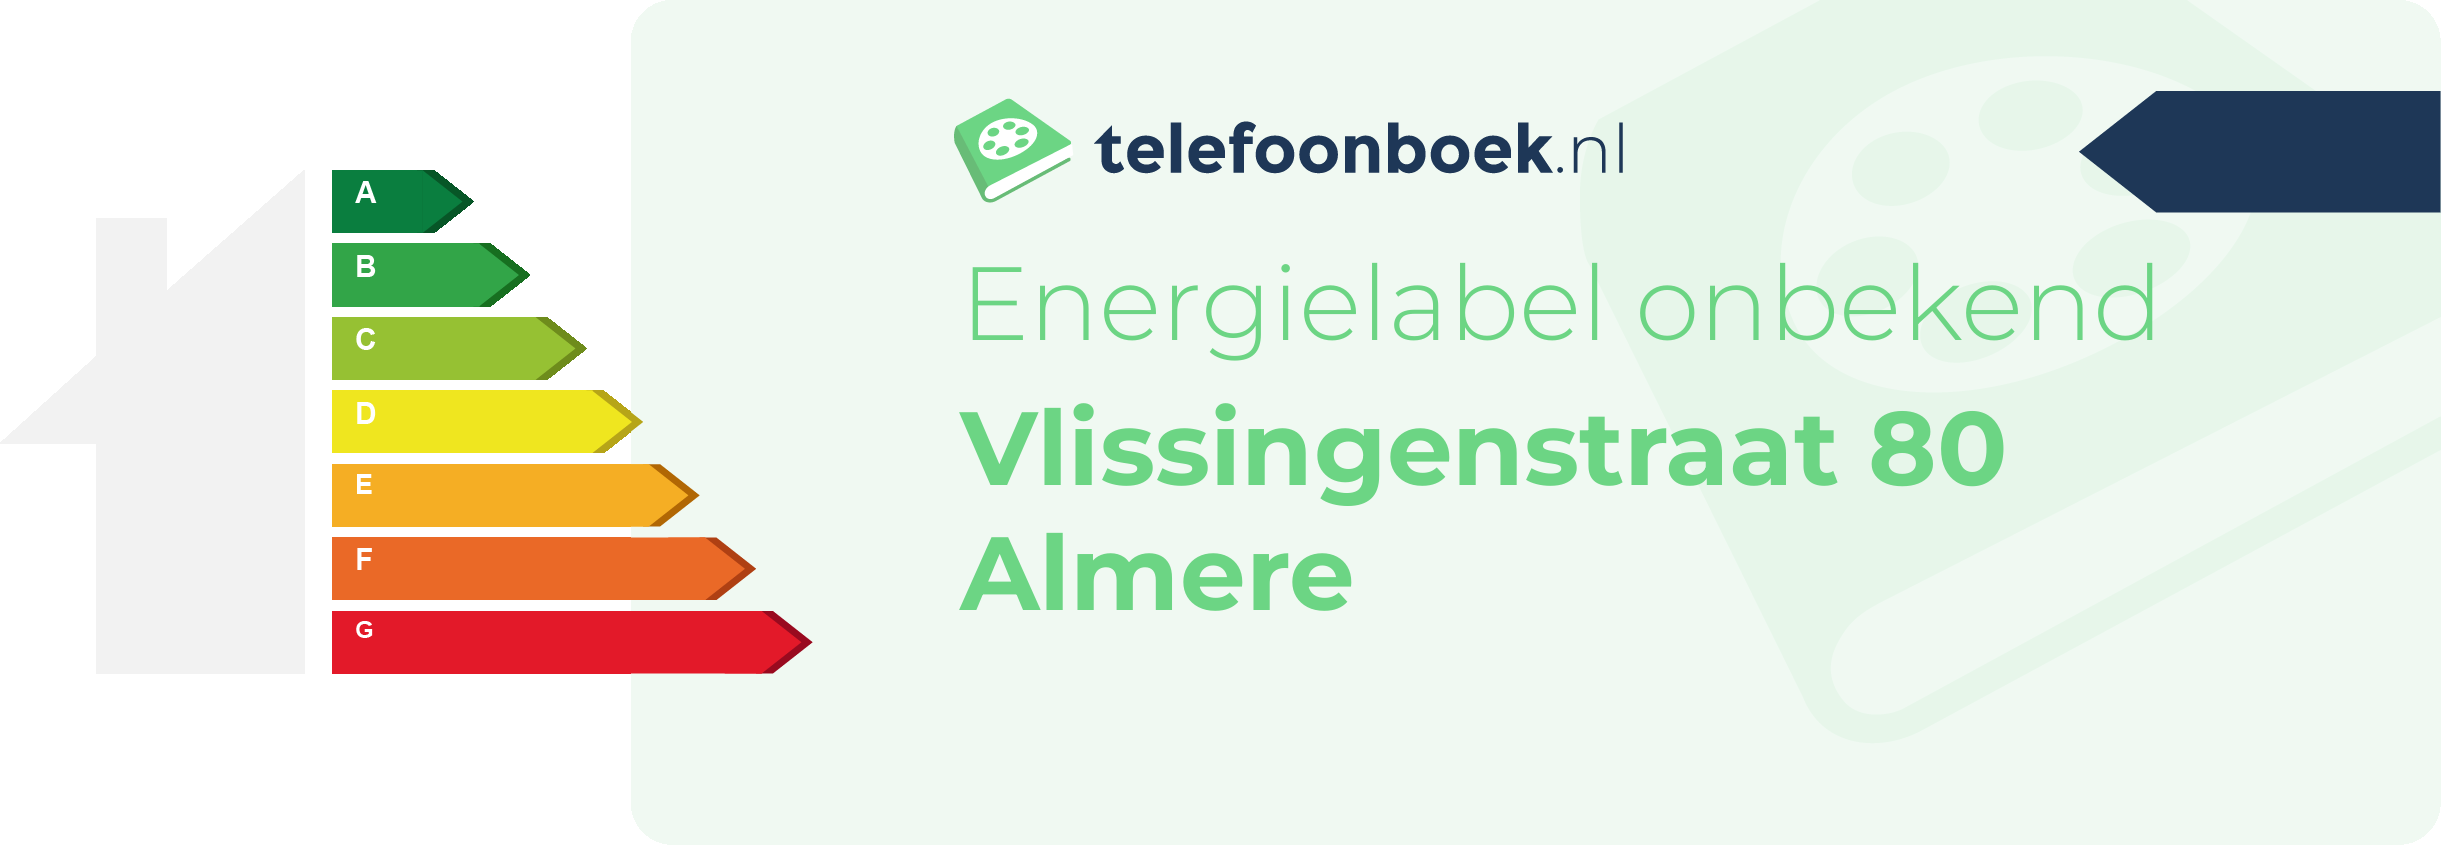 Energielabel Vlissingenstraat 80 Almere